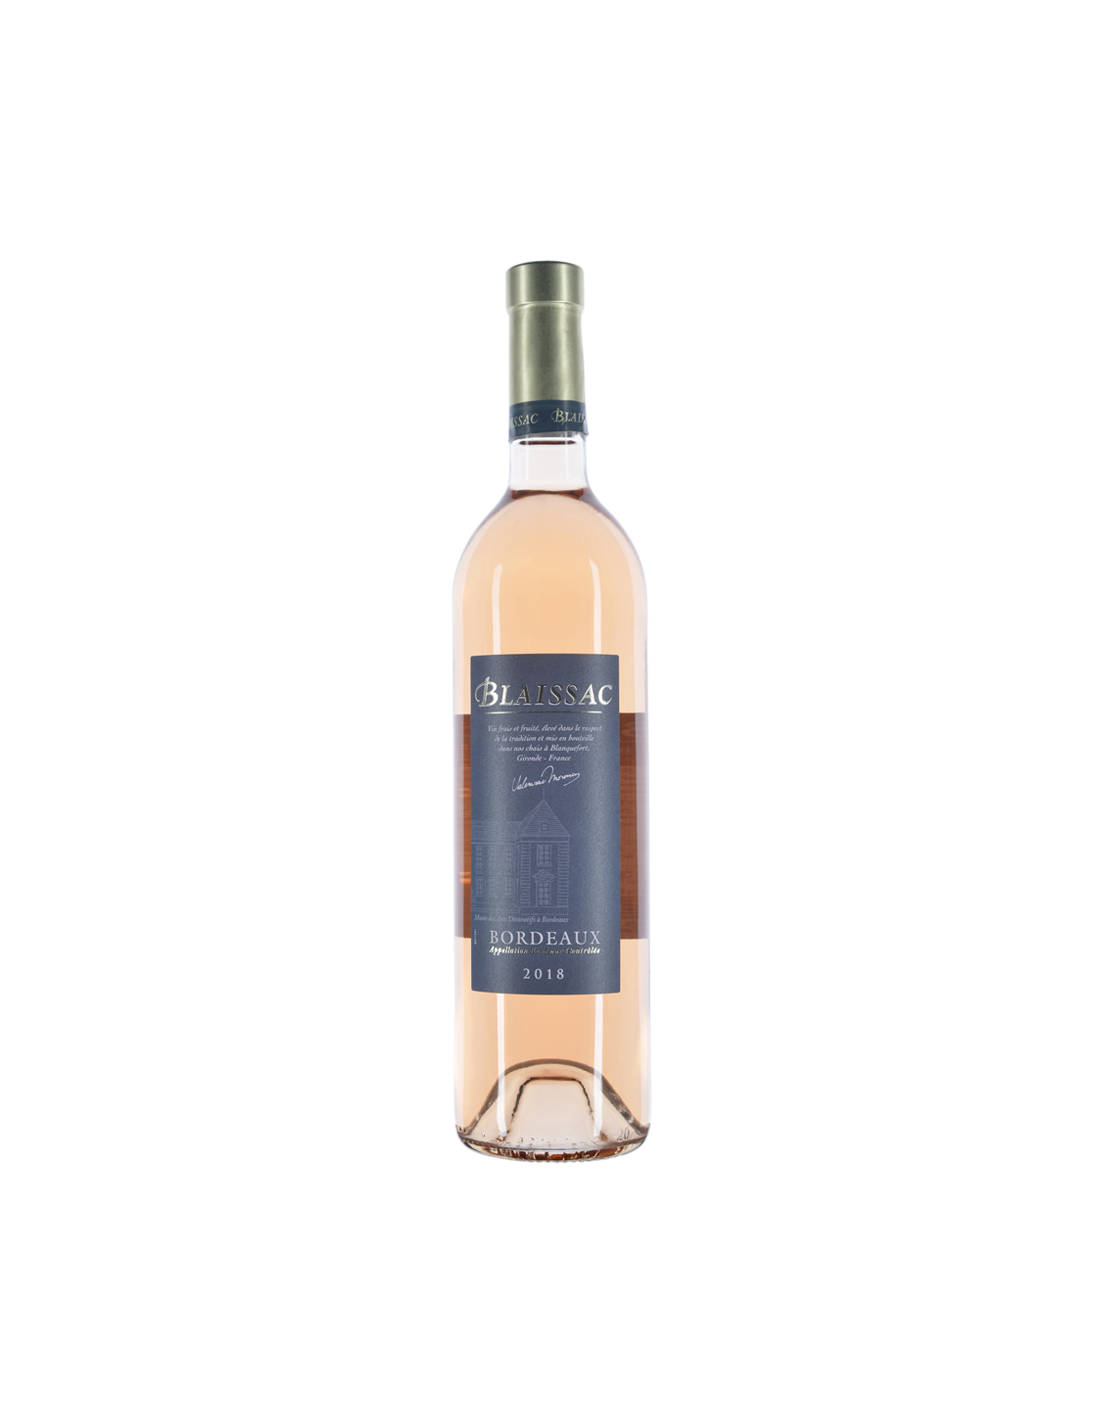 Vin roze sec, Blaissac, Bordeaux, 12.5% alc., 0.75L, Franta alcooldiscount.ro